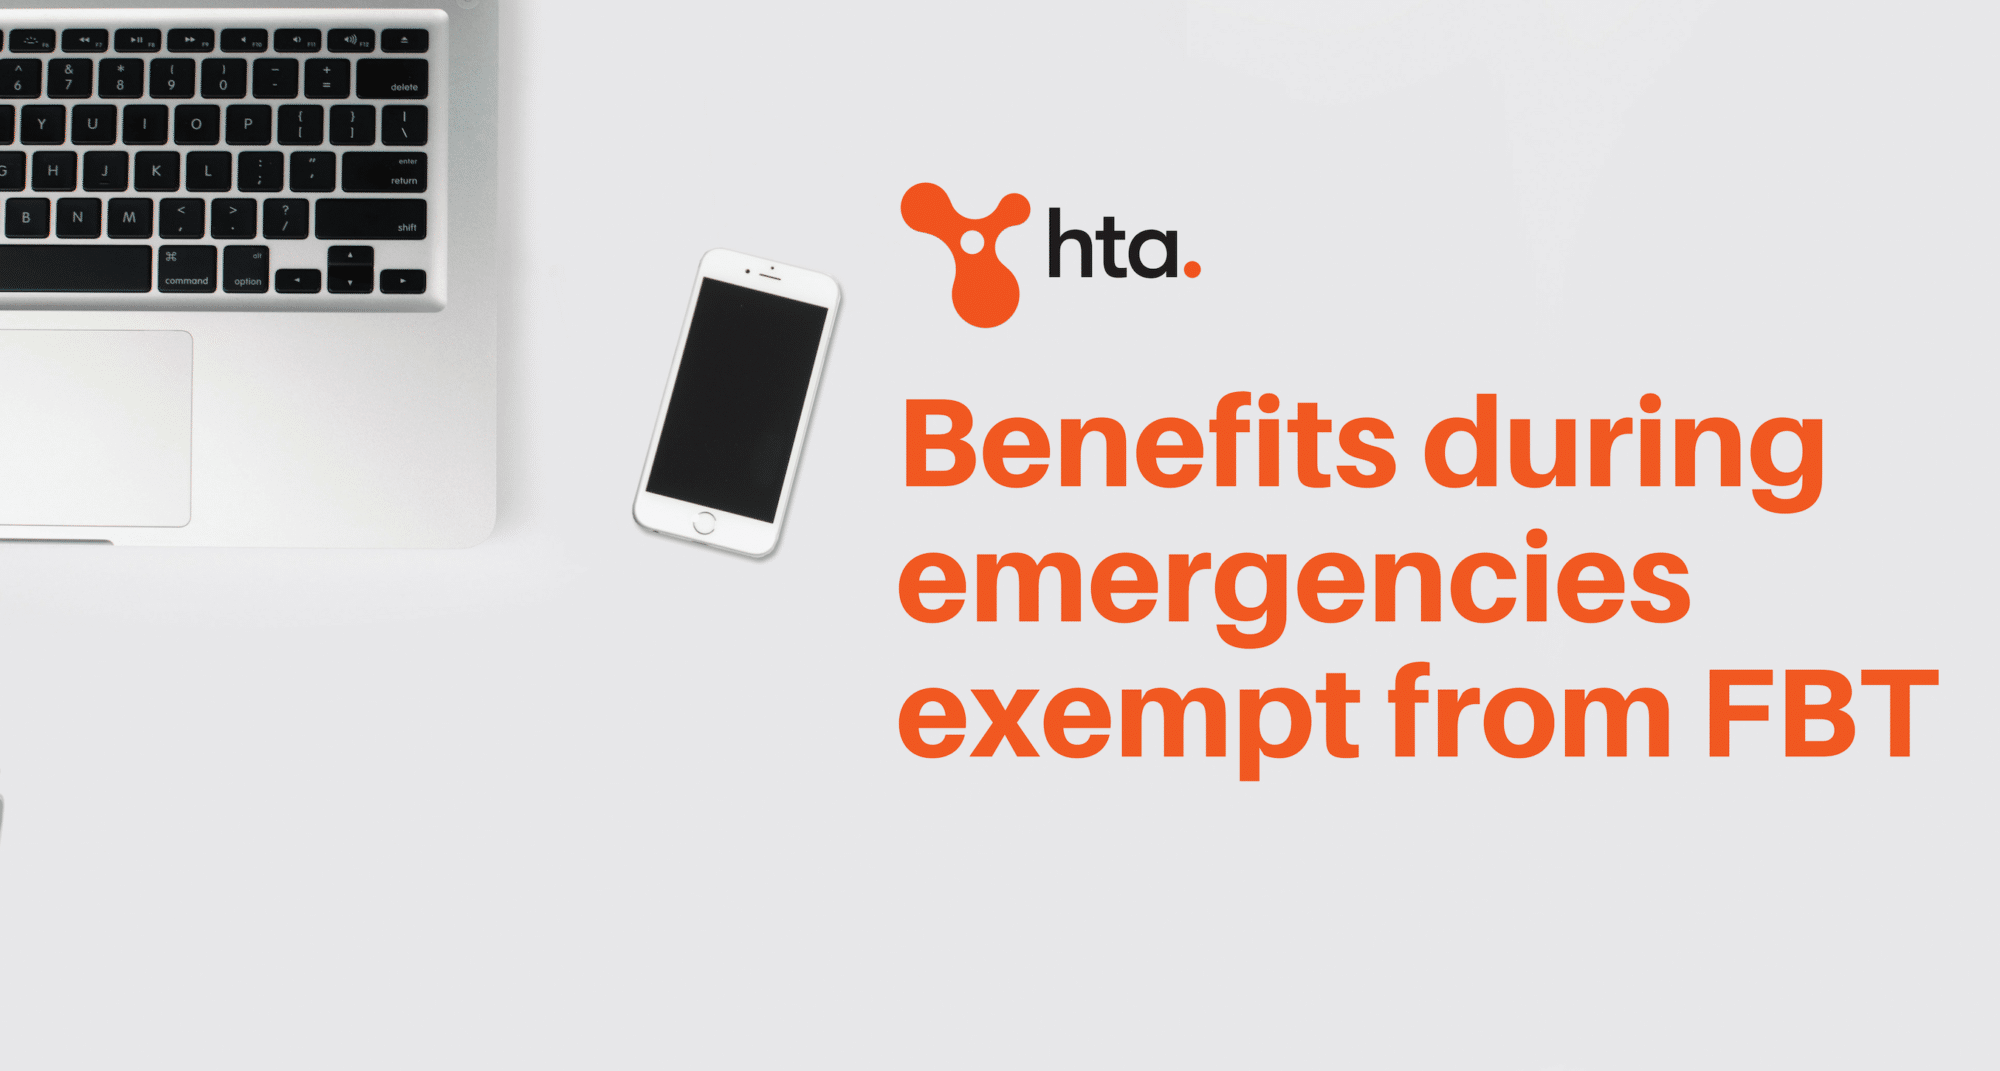 Benefits during emergencies exempt from FBT